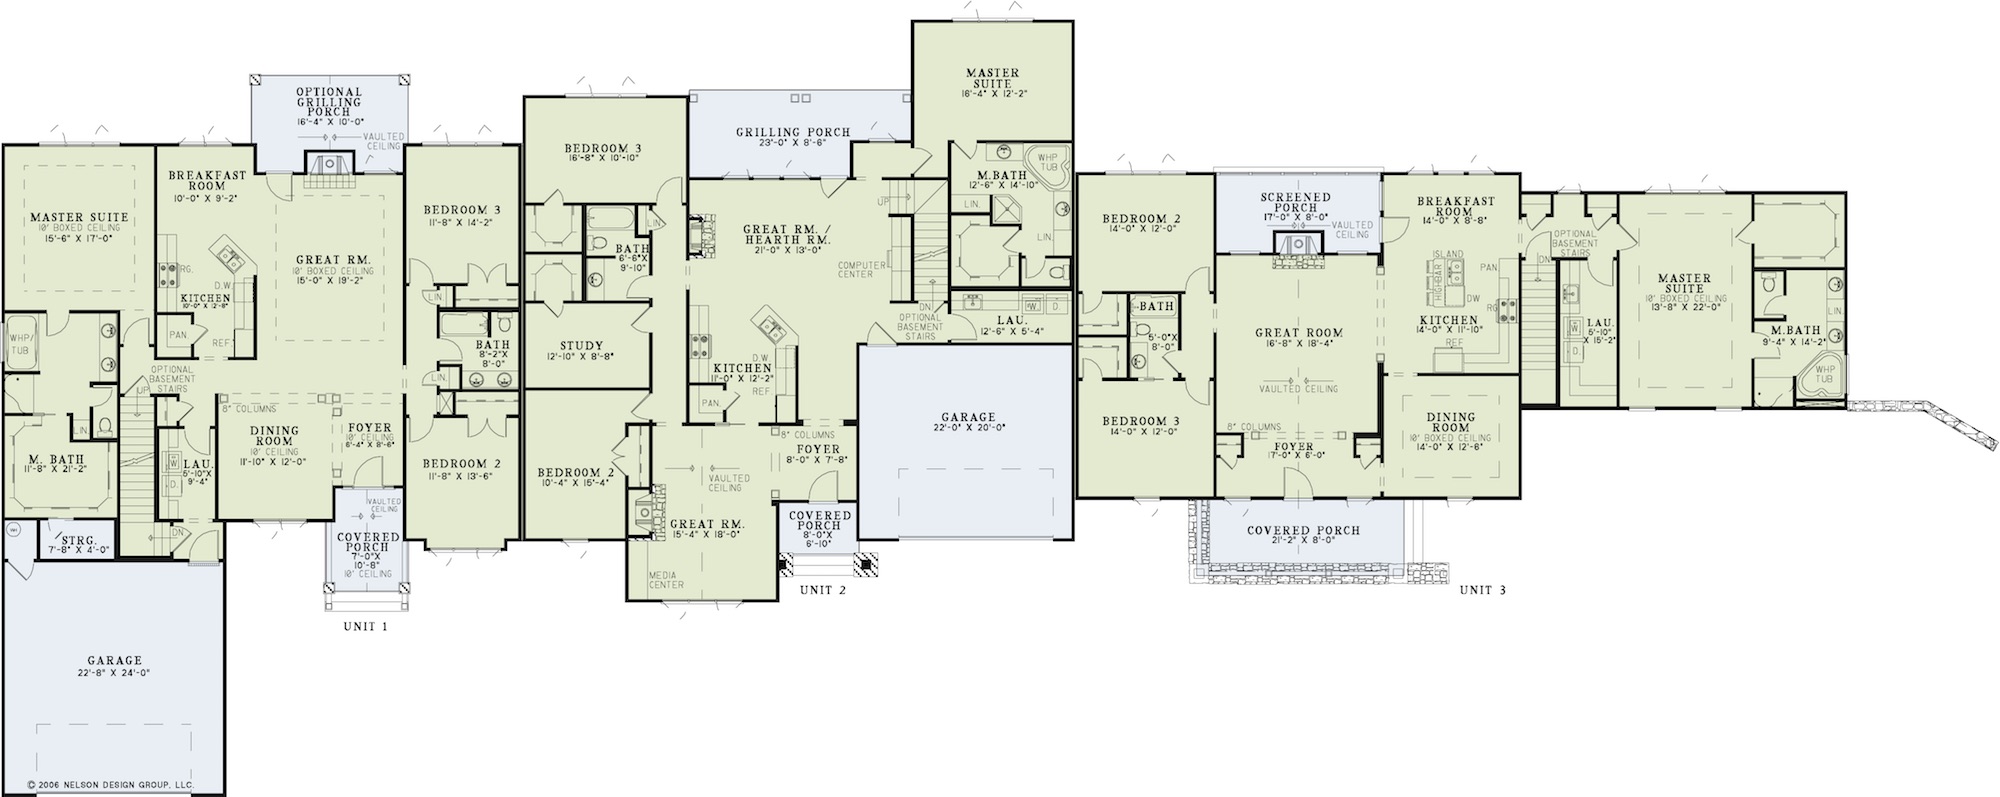 House Plan NDG 1175 Main Floor